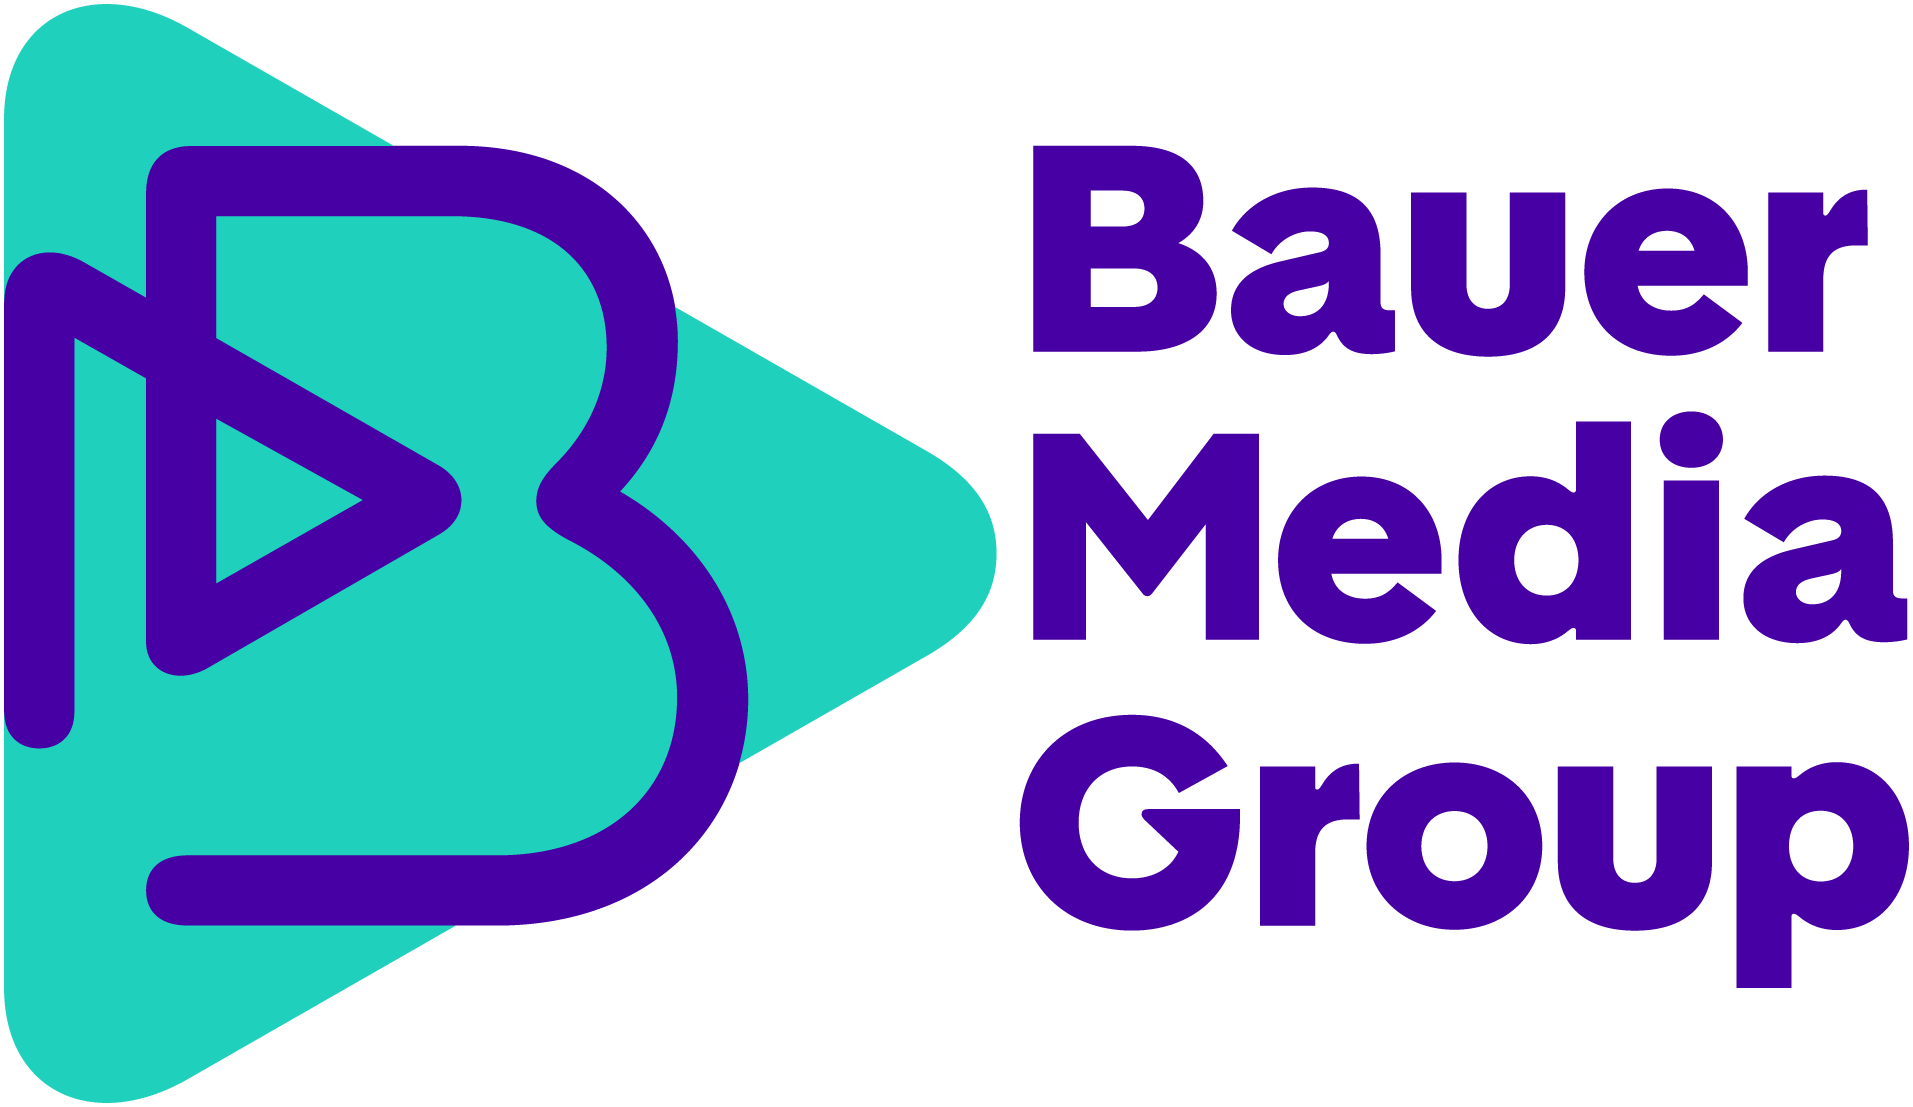 Bauer Media Group: Legal